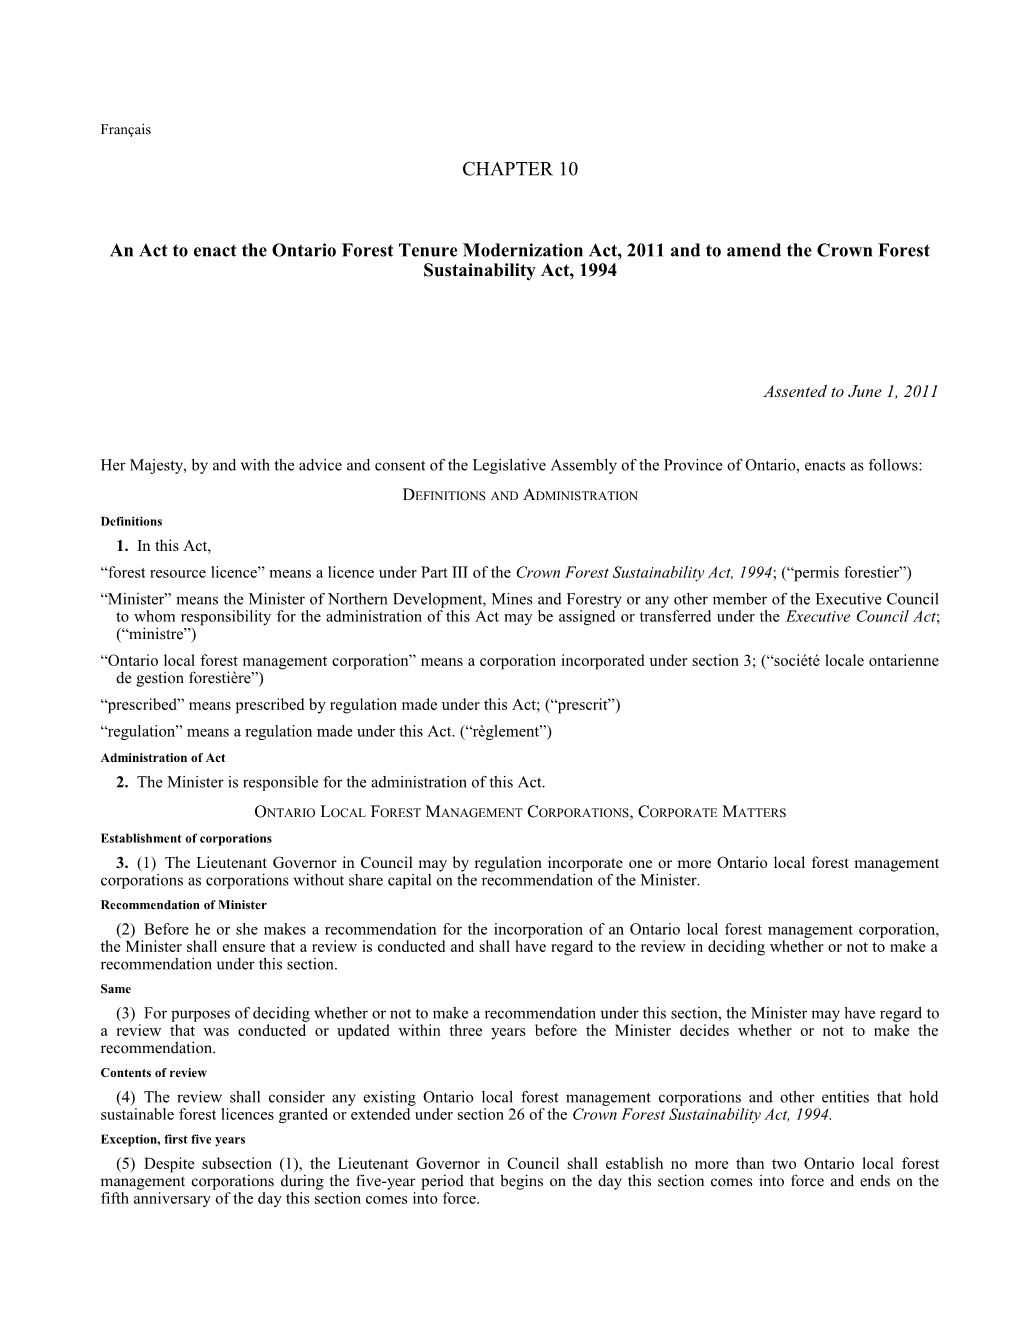 Ontario Forest Tenure Modernization Act, 2011, S.O. 2011, C. 10 - Bill 151